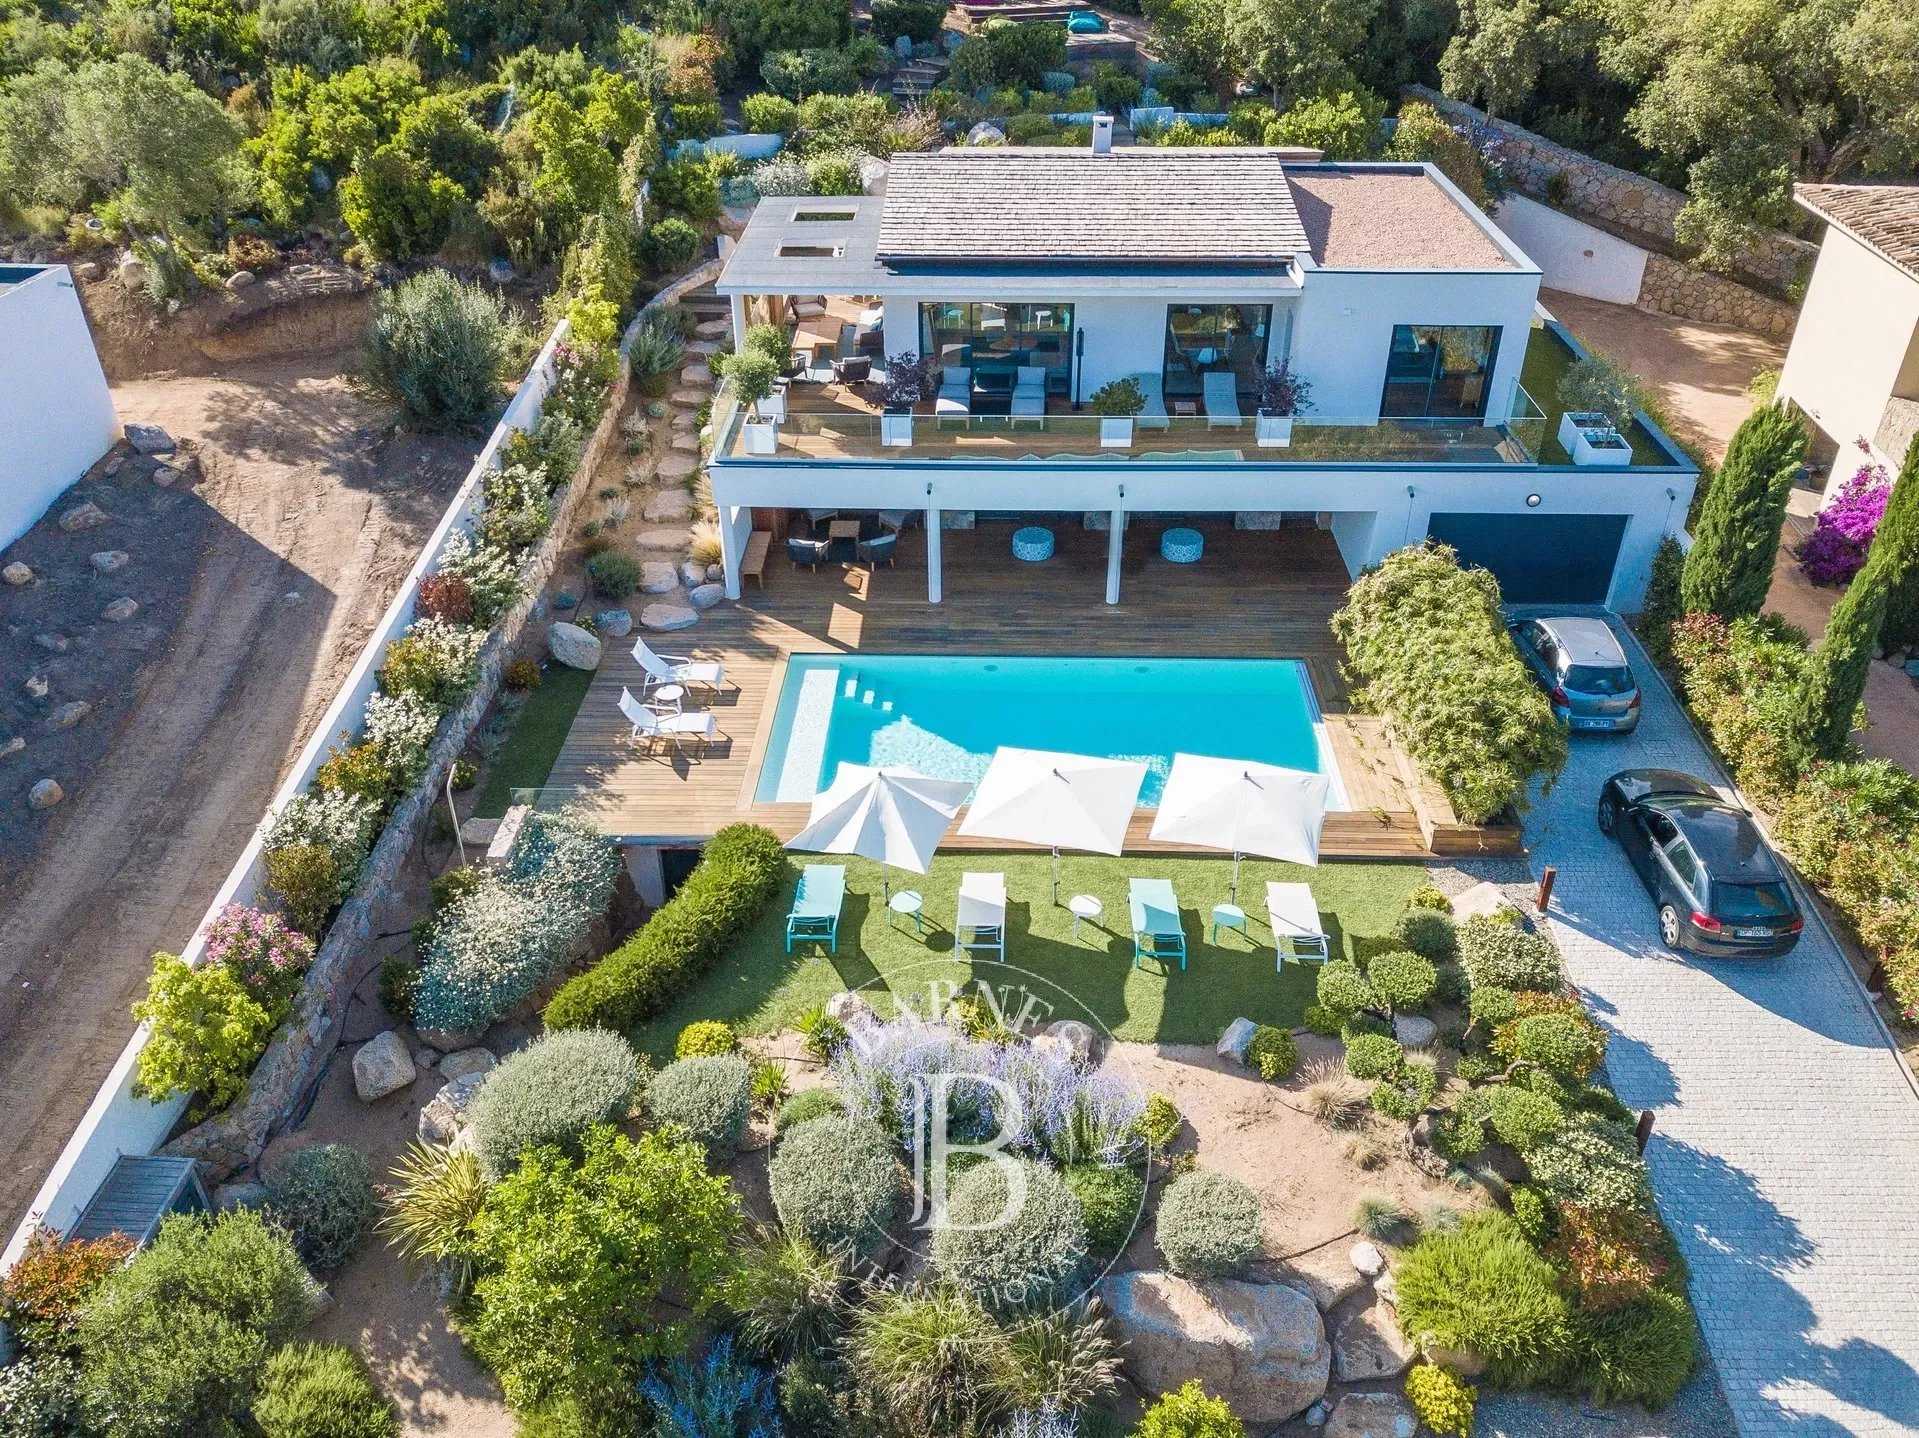 Domaine D'Arasu, Villa 4 bedrooms sea view and swimming pool, Casa Bianca RL270 picture 20